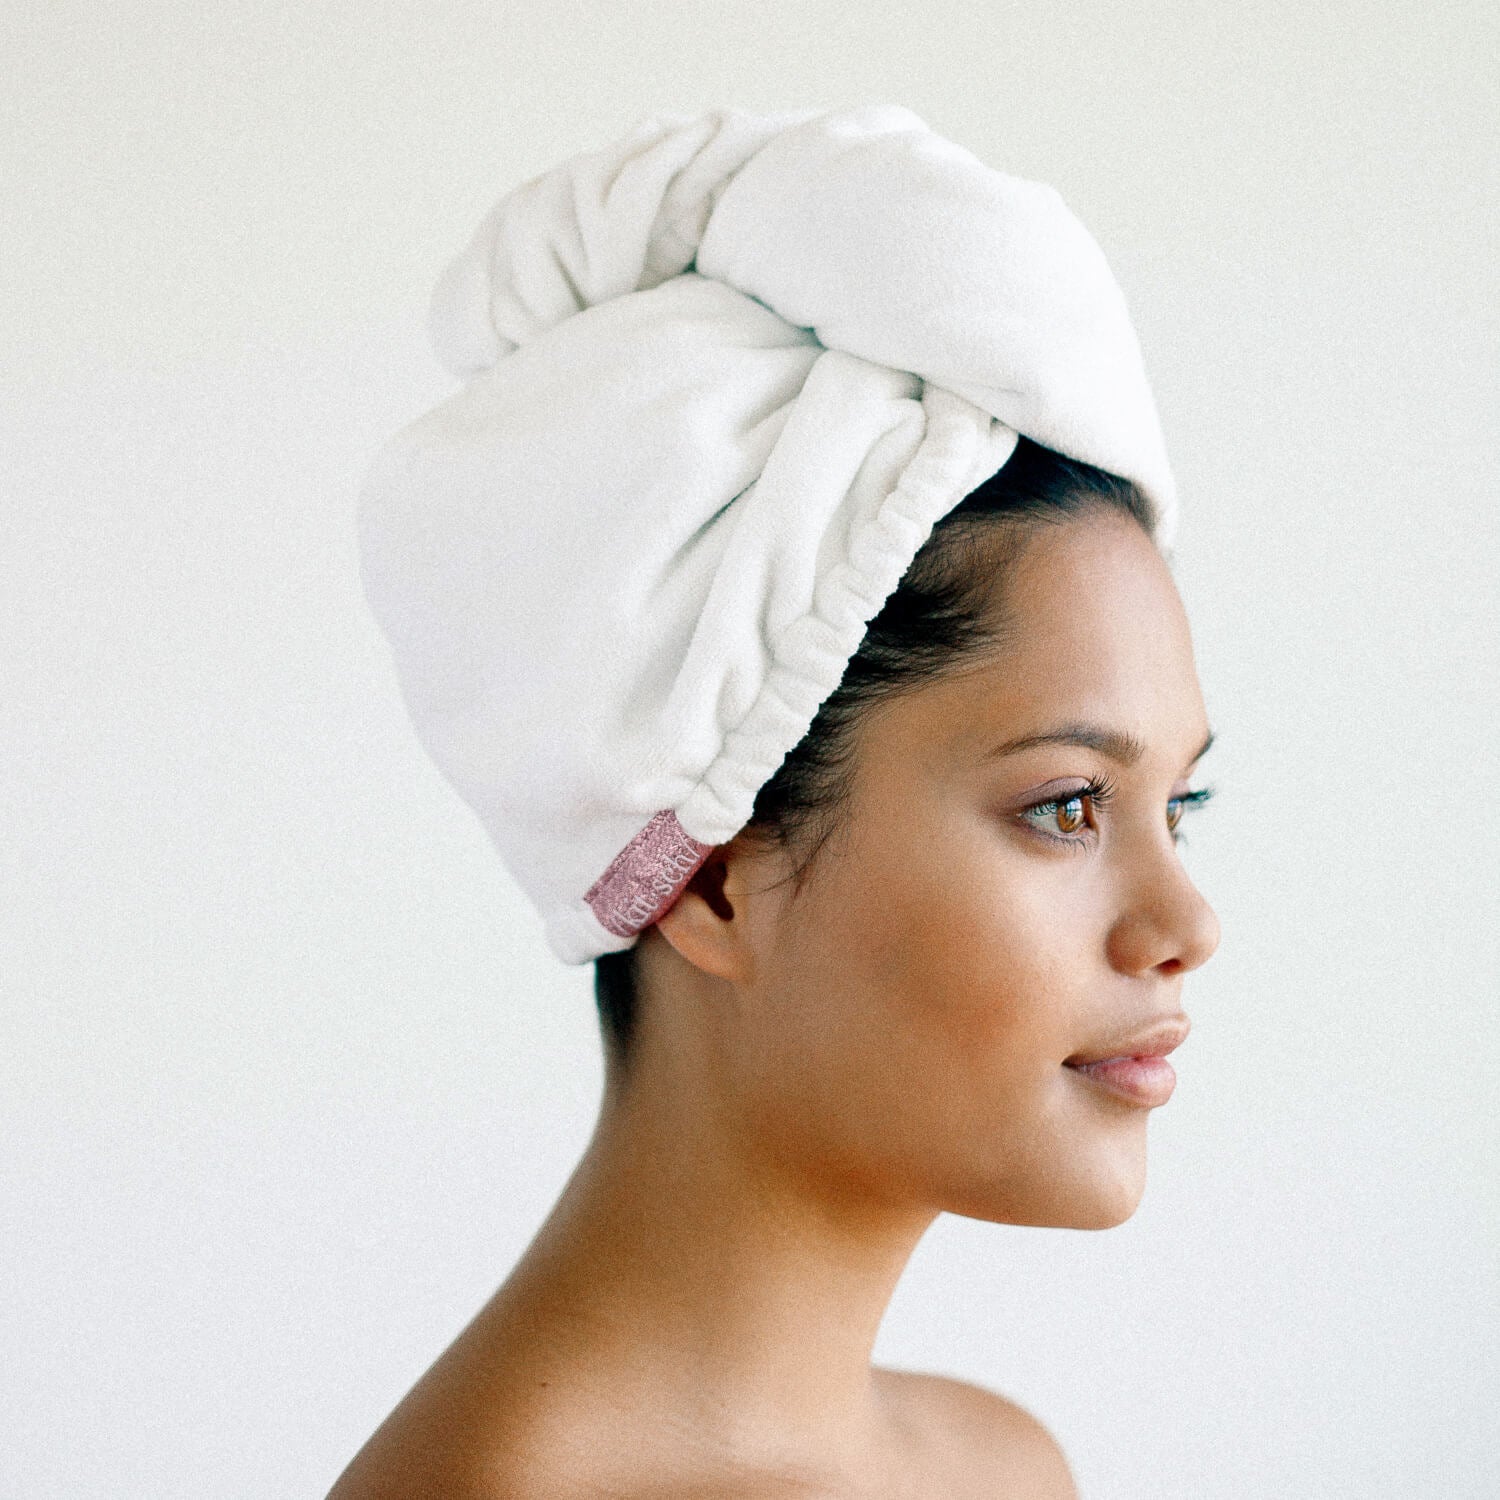 Quick Drying Hair Towel - White | Bath